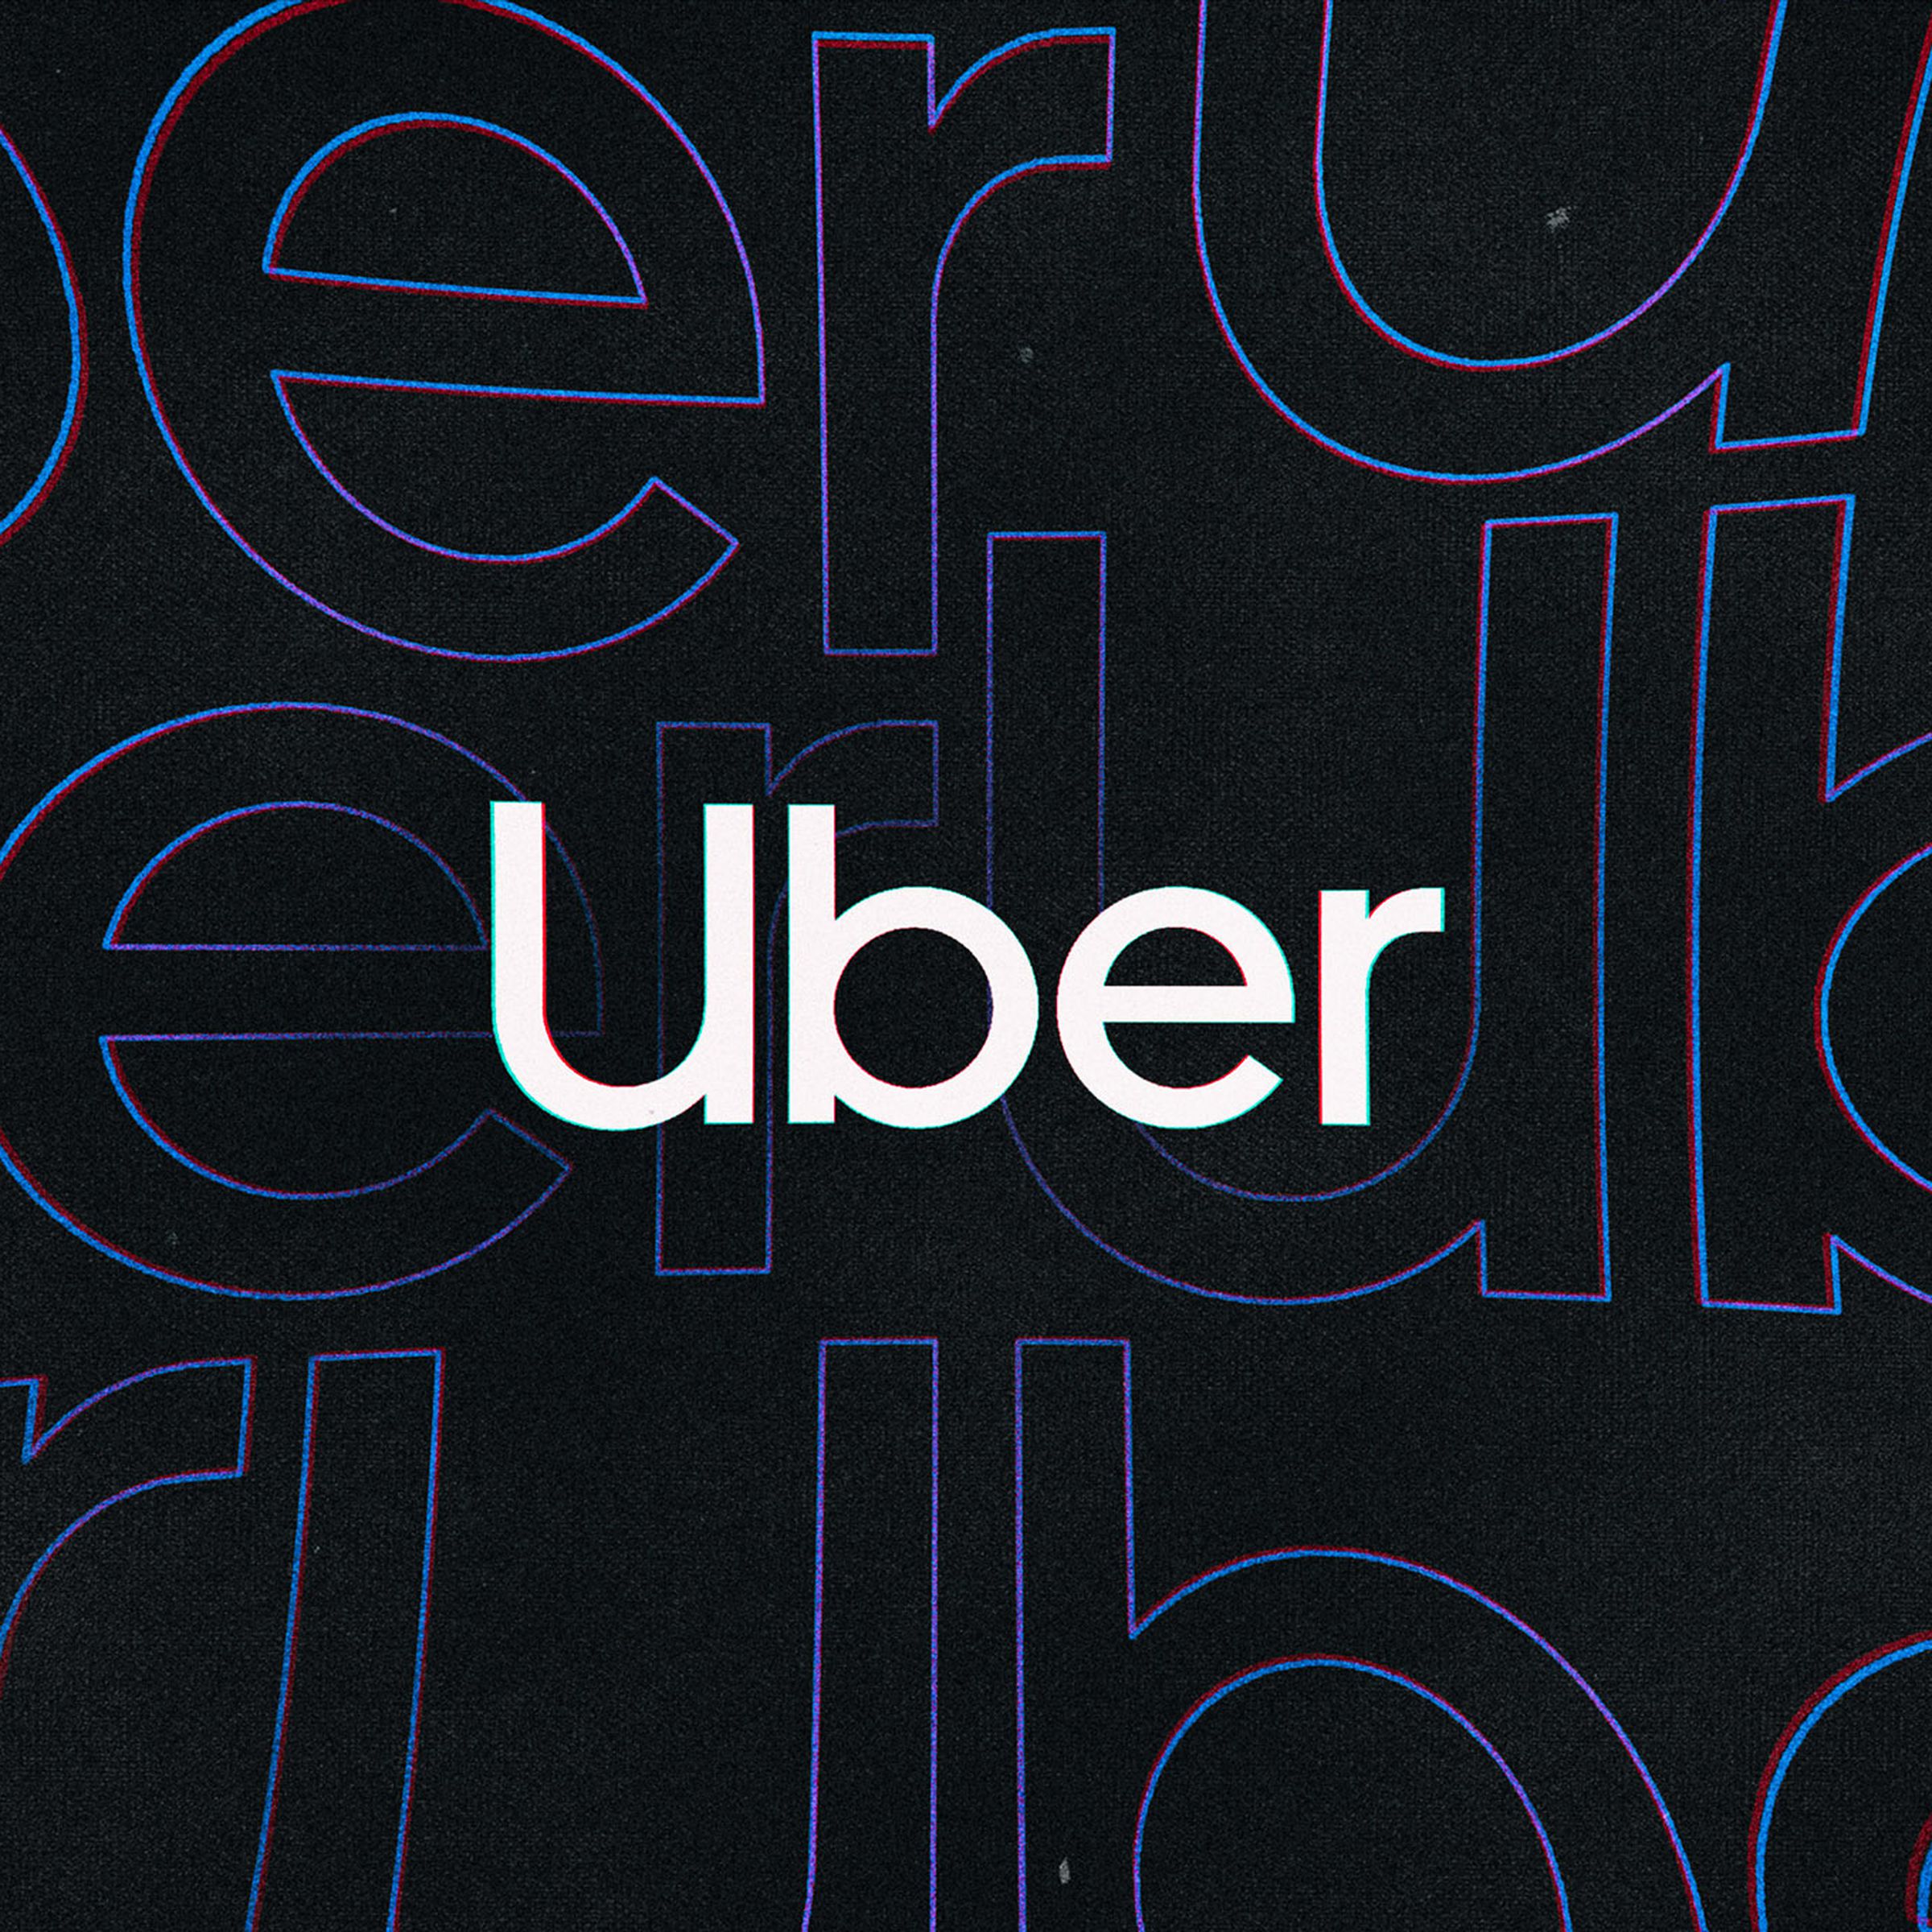 The Uber logo against a dark background.